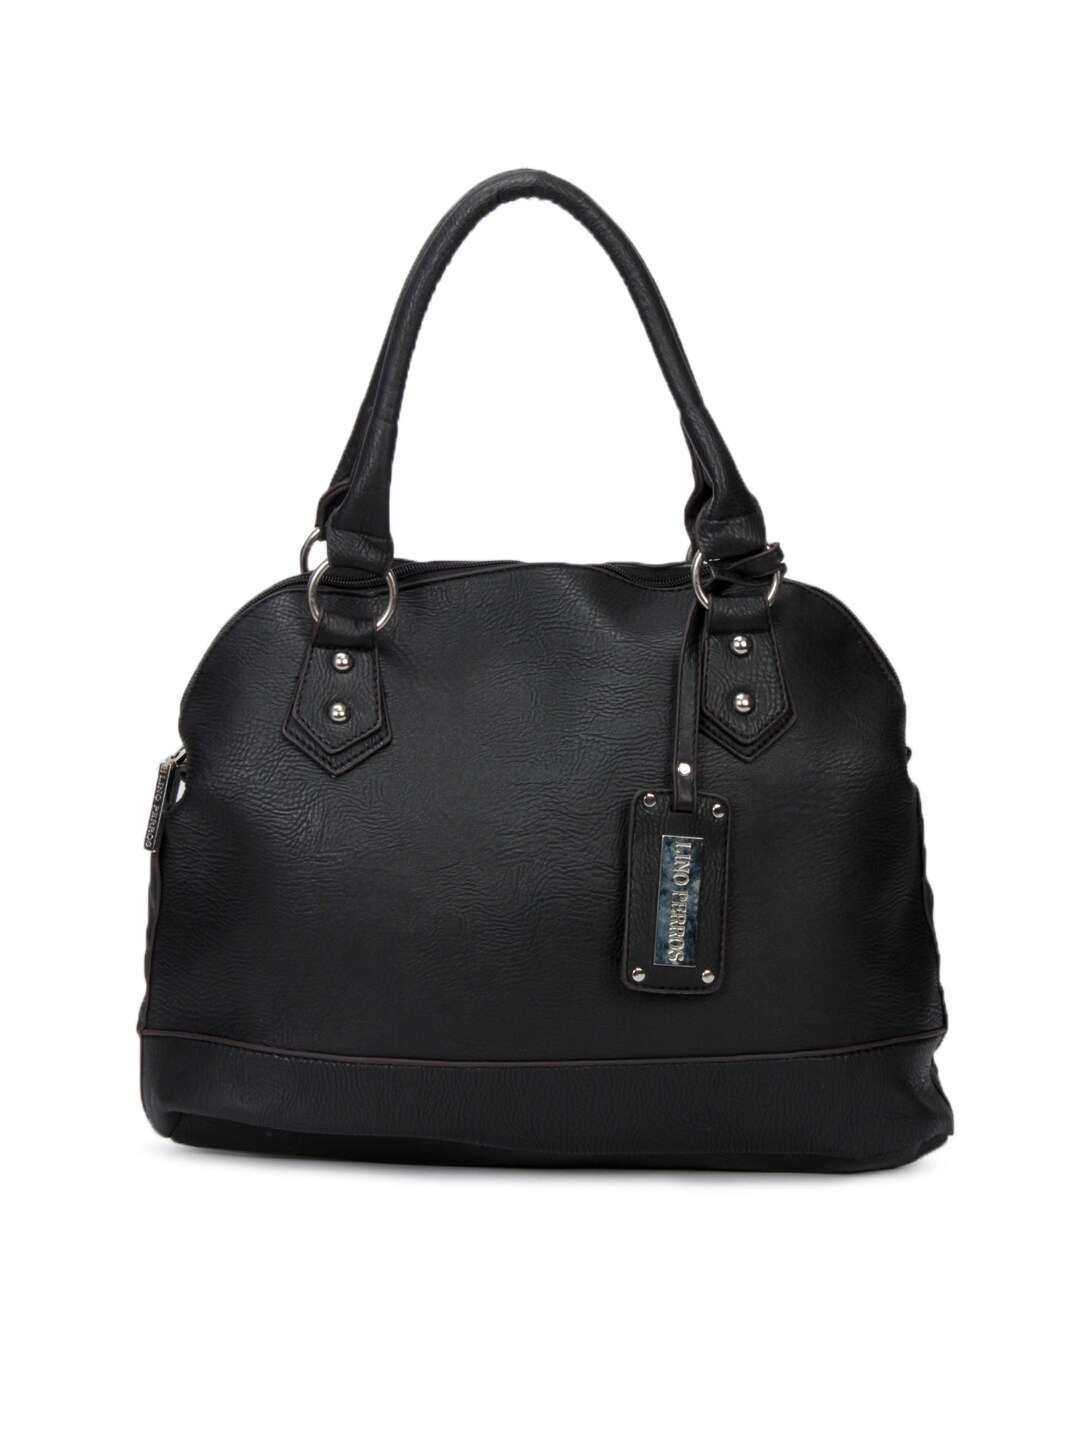 Lino Perros Women Leatherette Black Handbag